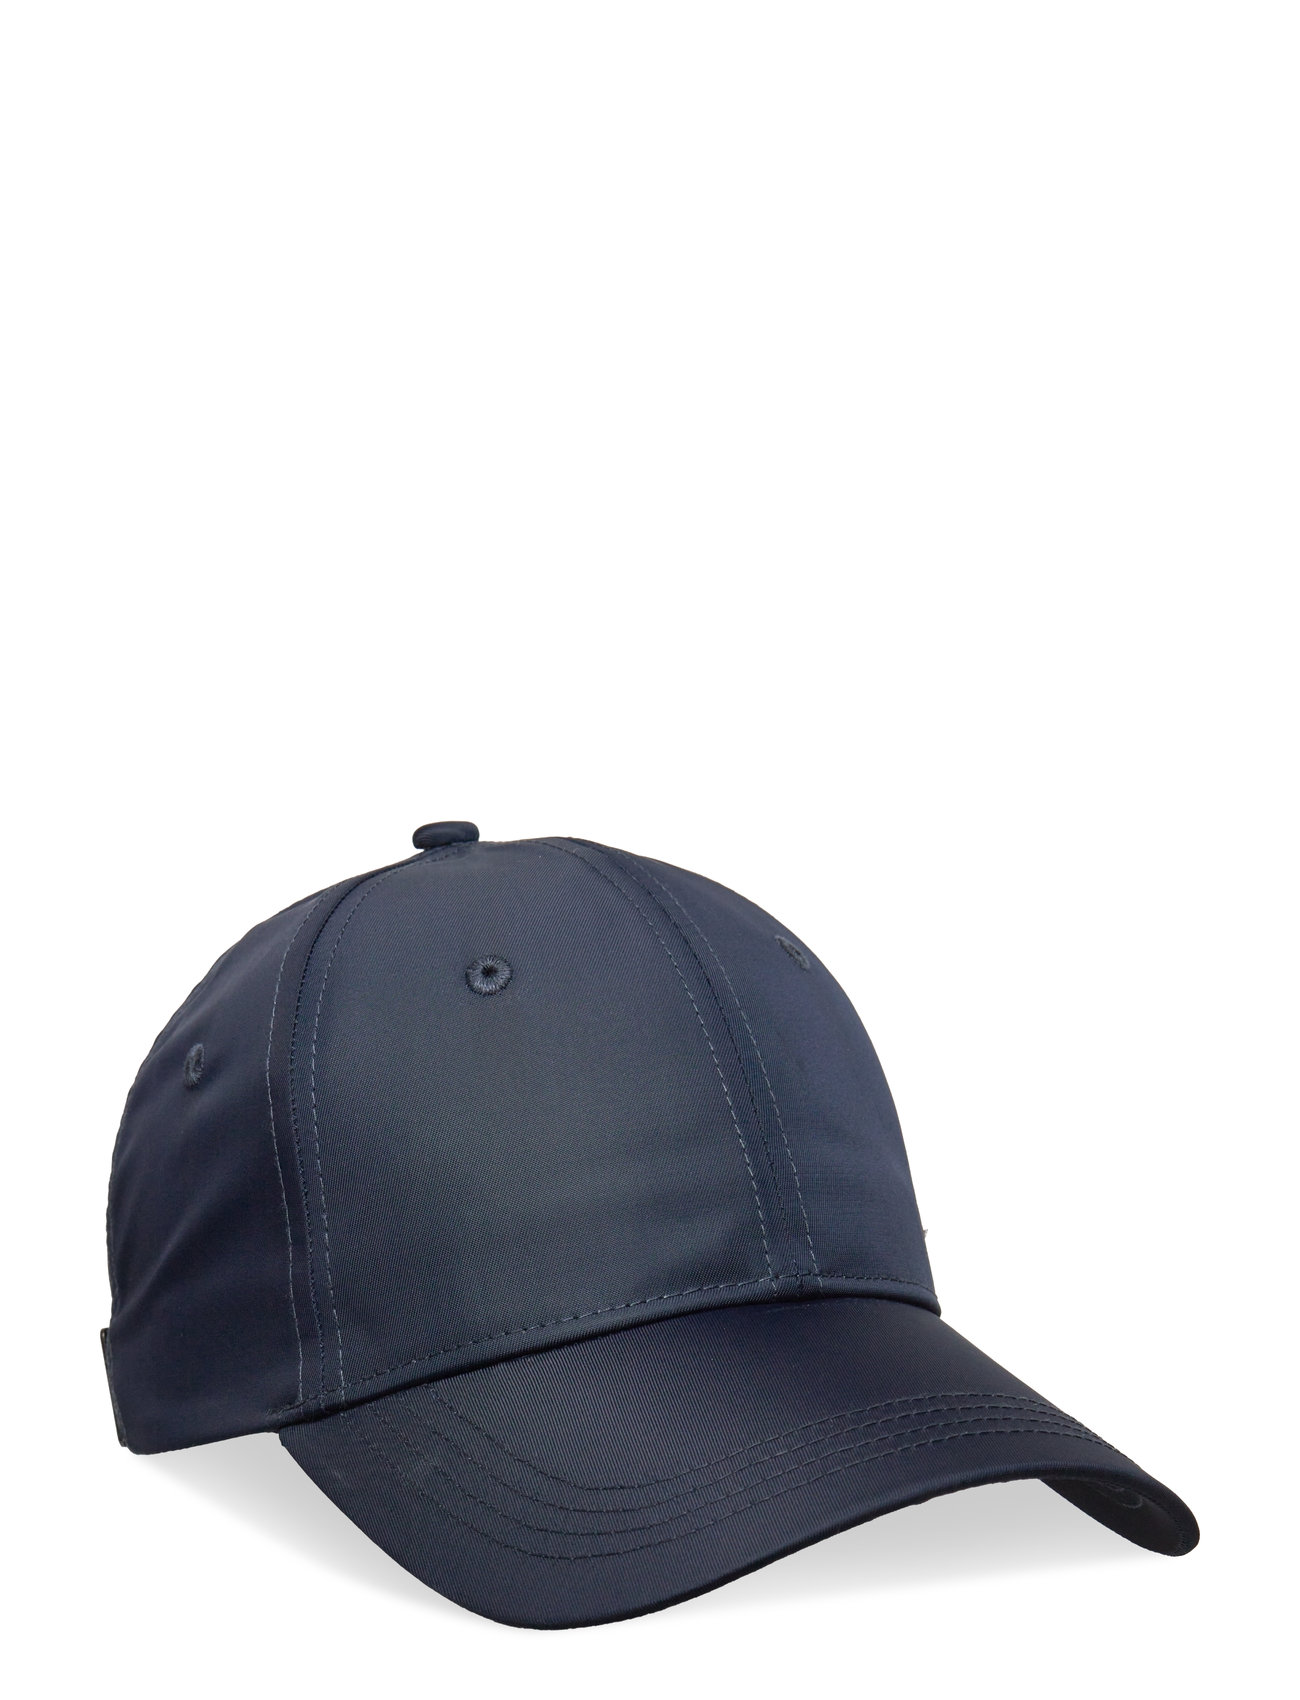 Repreve Corporate Cap Accessories Headwear Caps Navy Tommy Hilfiger